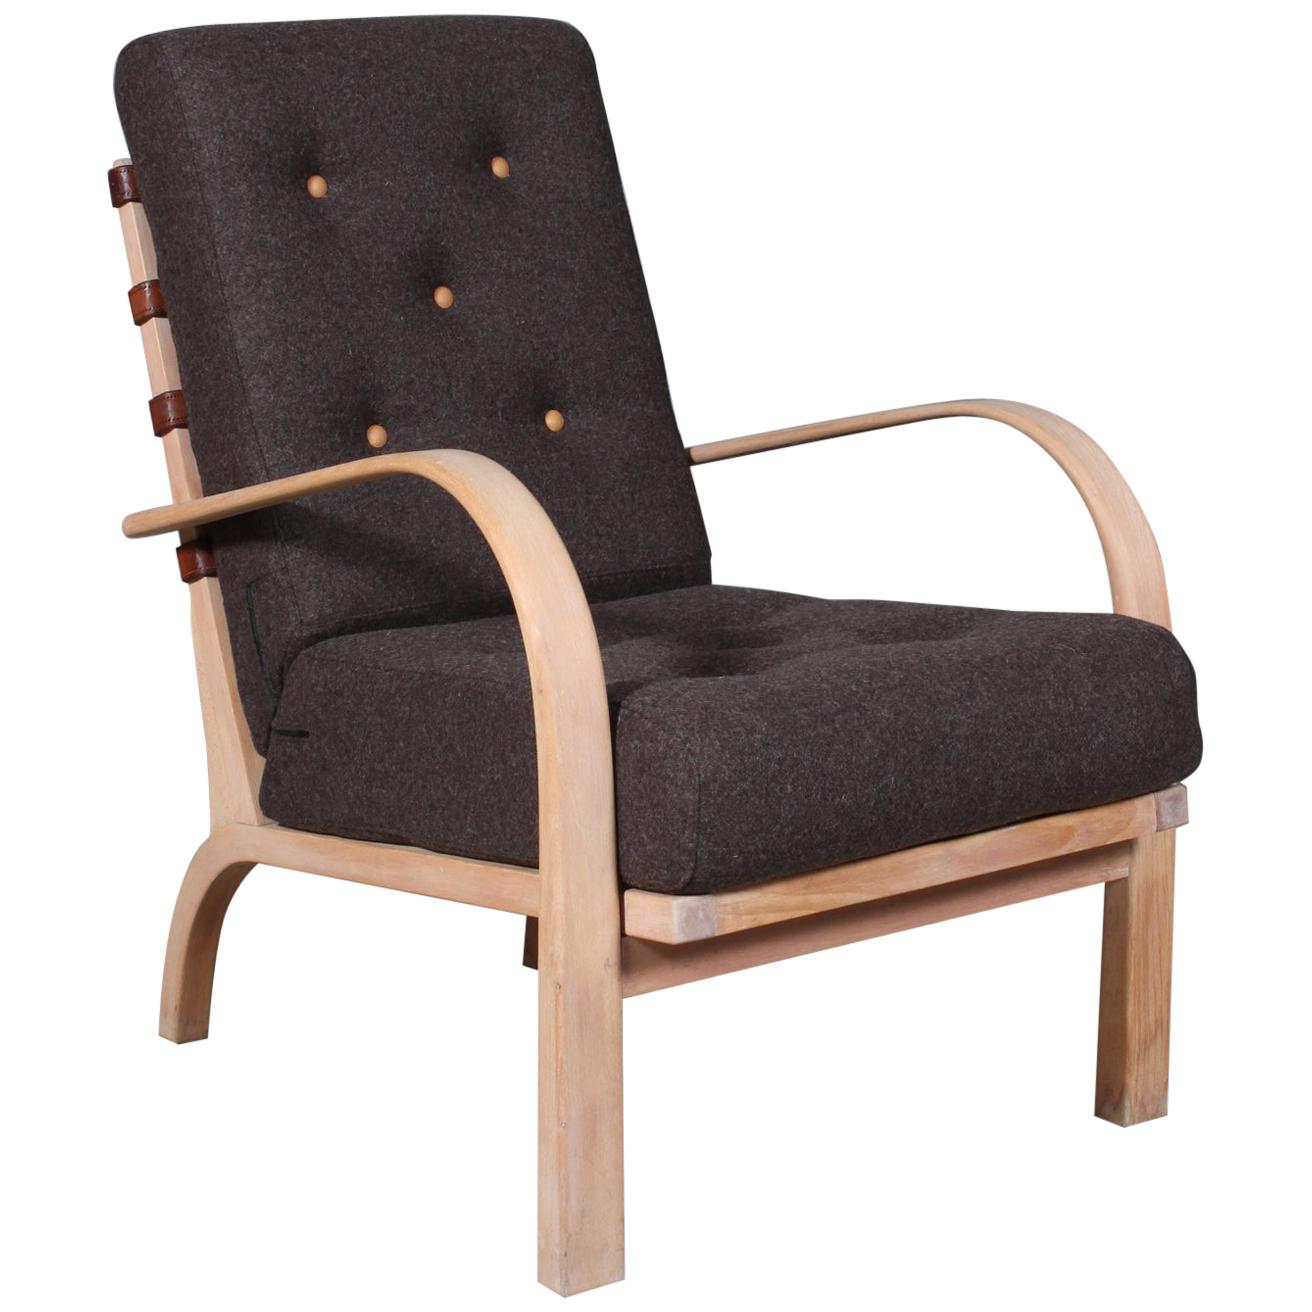 Ernst Heilmann Sevaldsen for Fritz Hansen Rare Lounge Chair from the 1930s